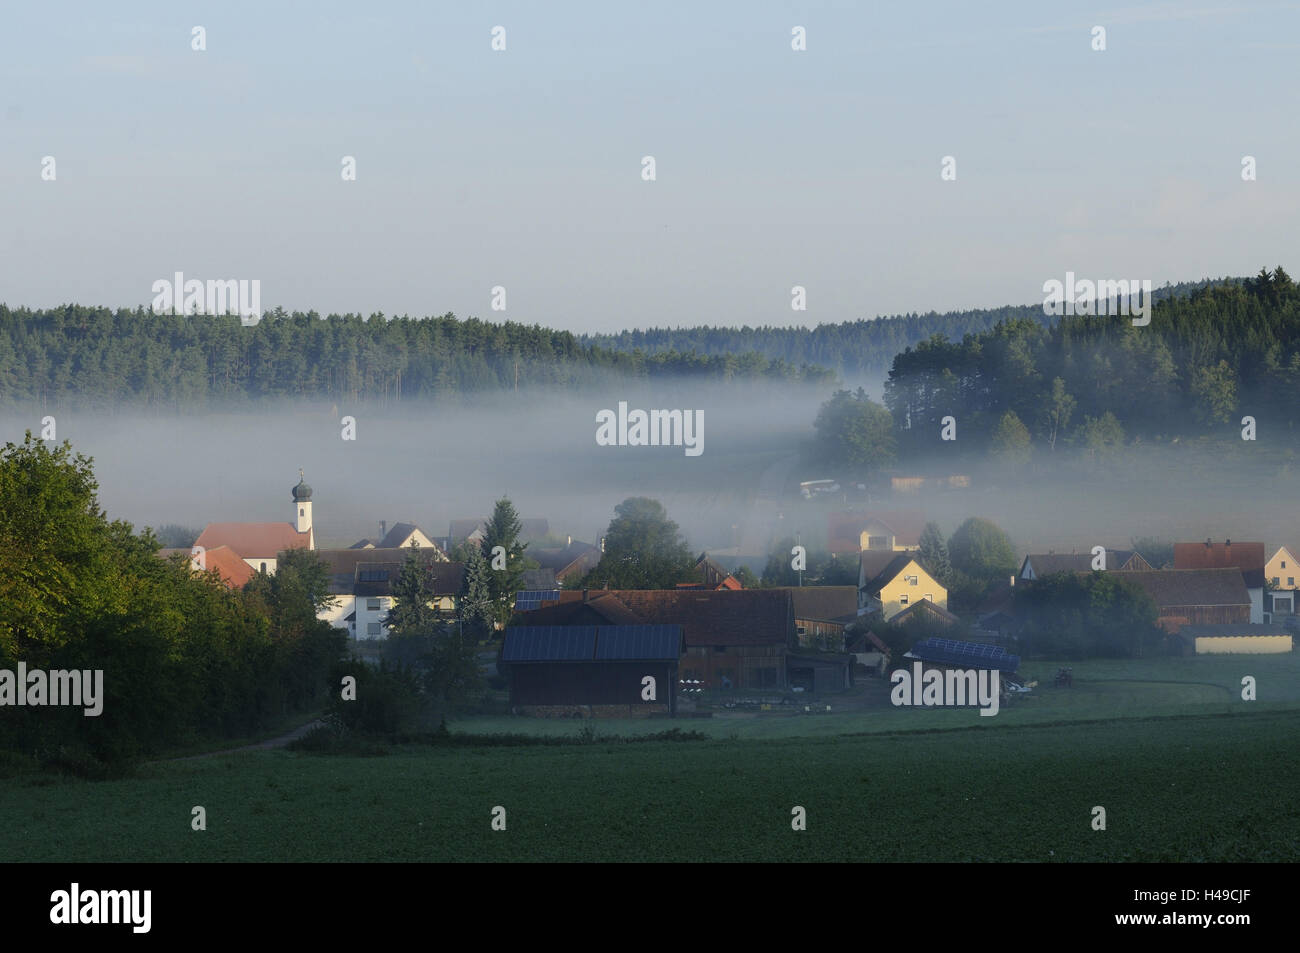 Europe, Central Europe, Germany, Bavaria, Upper Palatinate, Albertshofen, village, Stock Photo